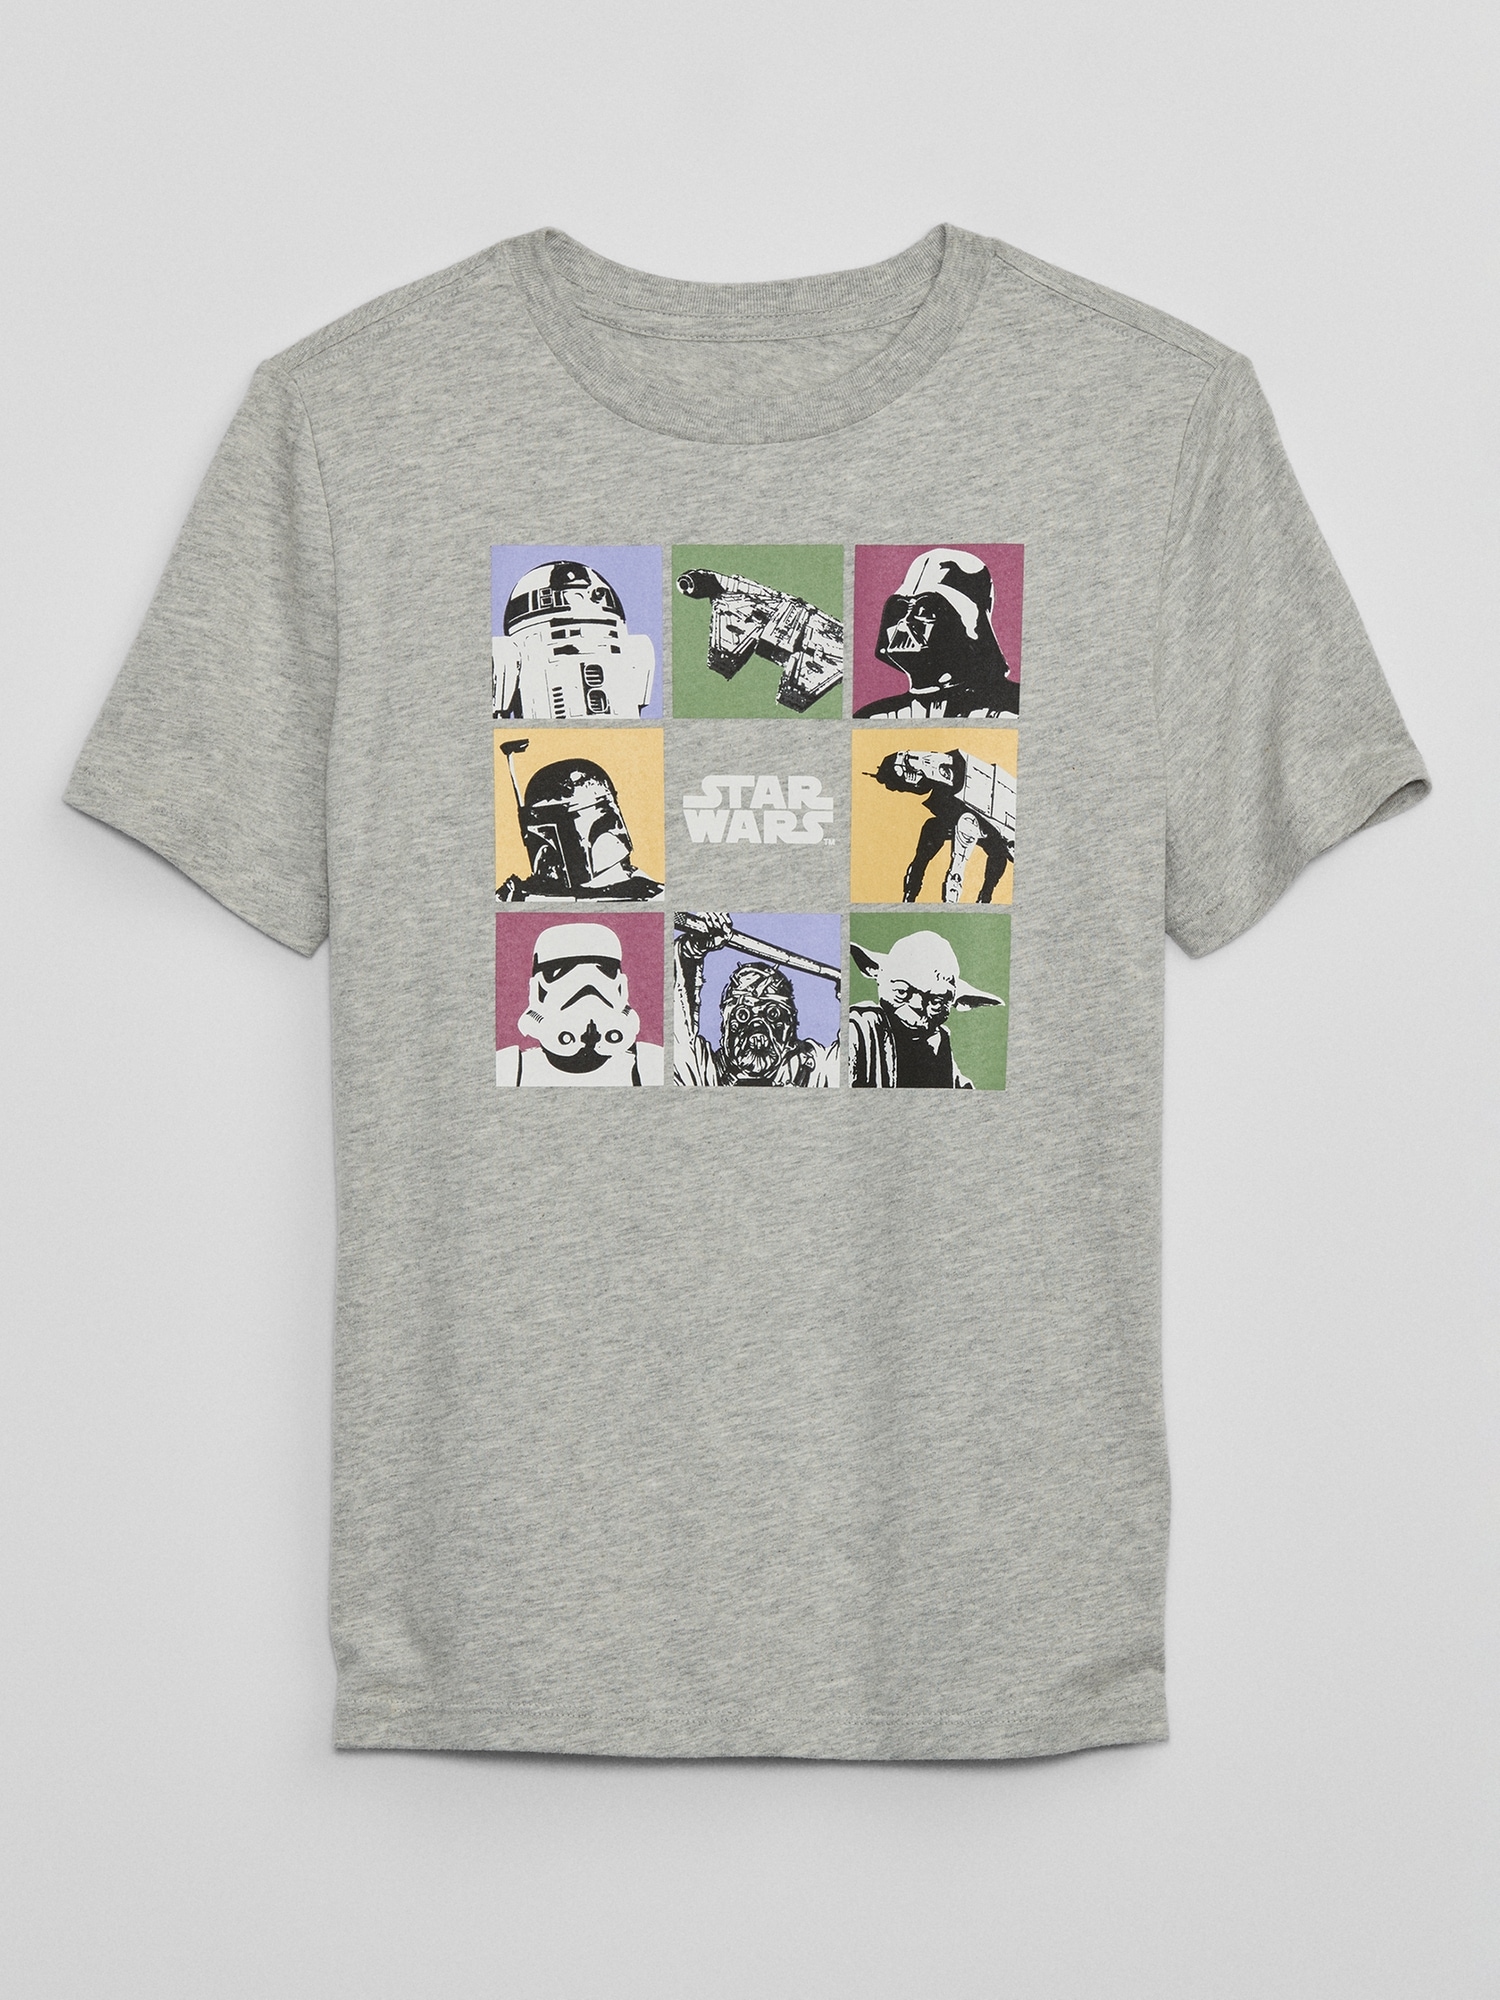 GapKids | Star Gap Wars™ | T-Shirt Graphic Factory